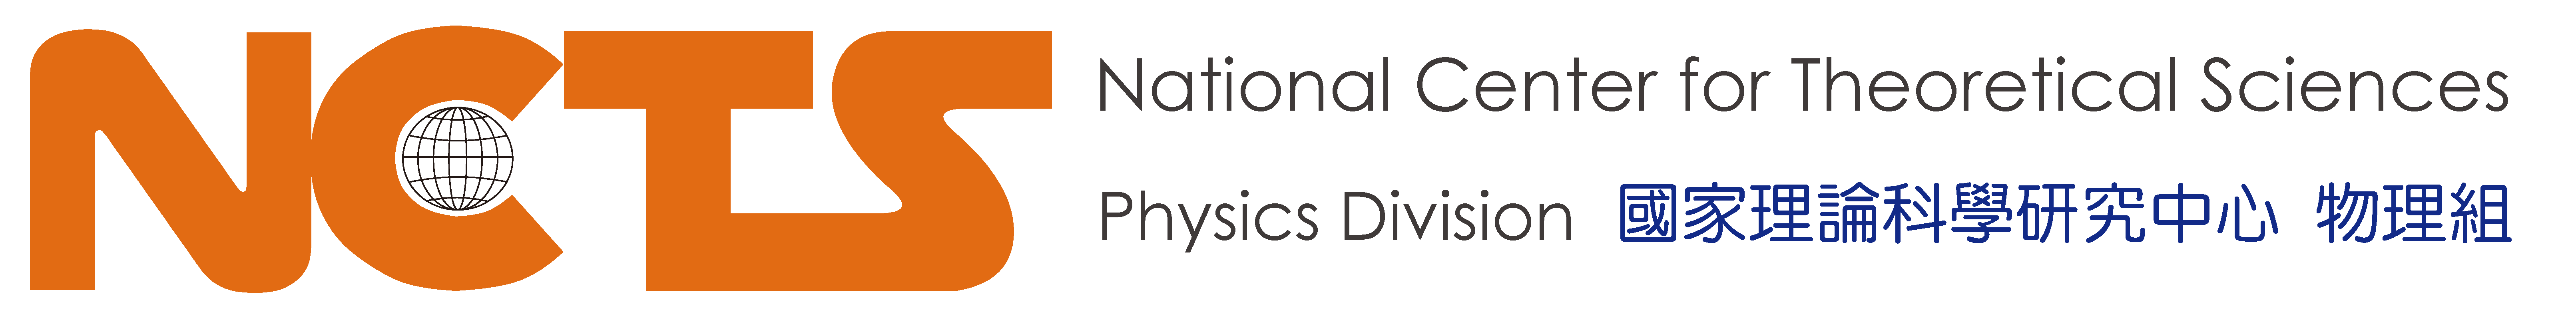 NCTS Physics Division 國家理論科學研究中心 ‧ 物理組 Logo